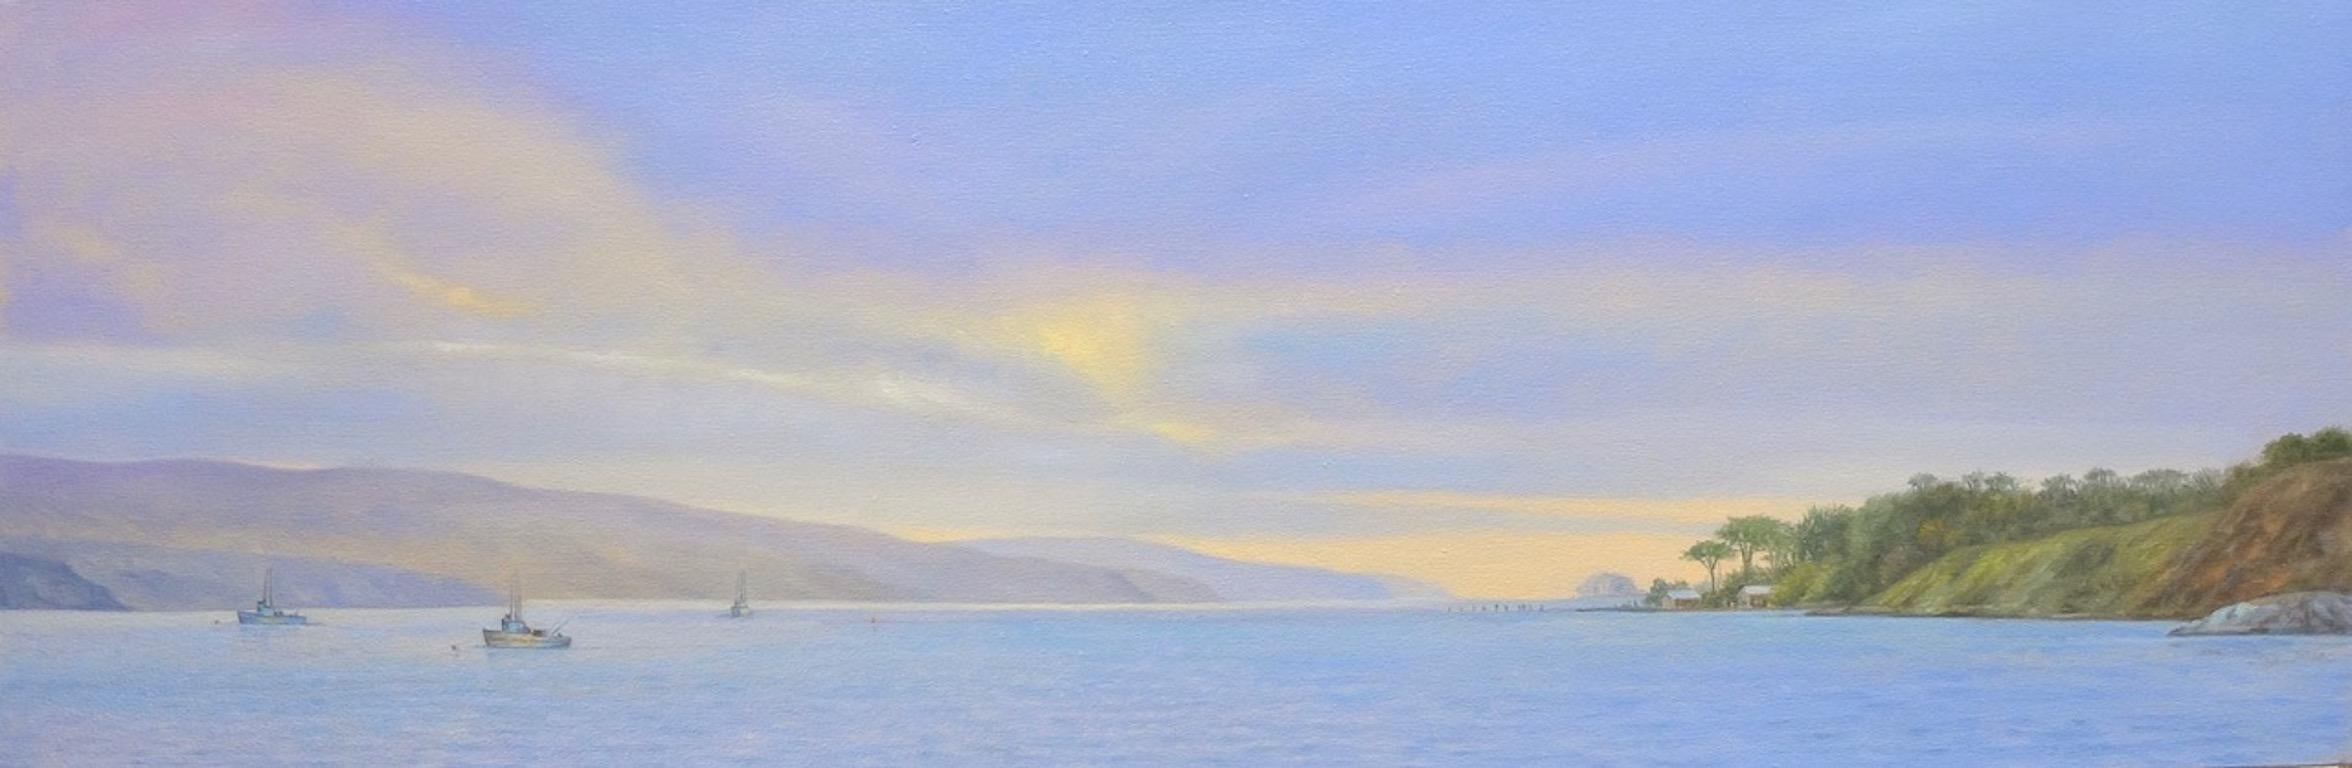 Willard Dixon Still-Life Painting - Tamalas Bay Evening / Boats on the Bay at sunset - peaceful